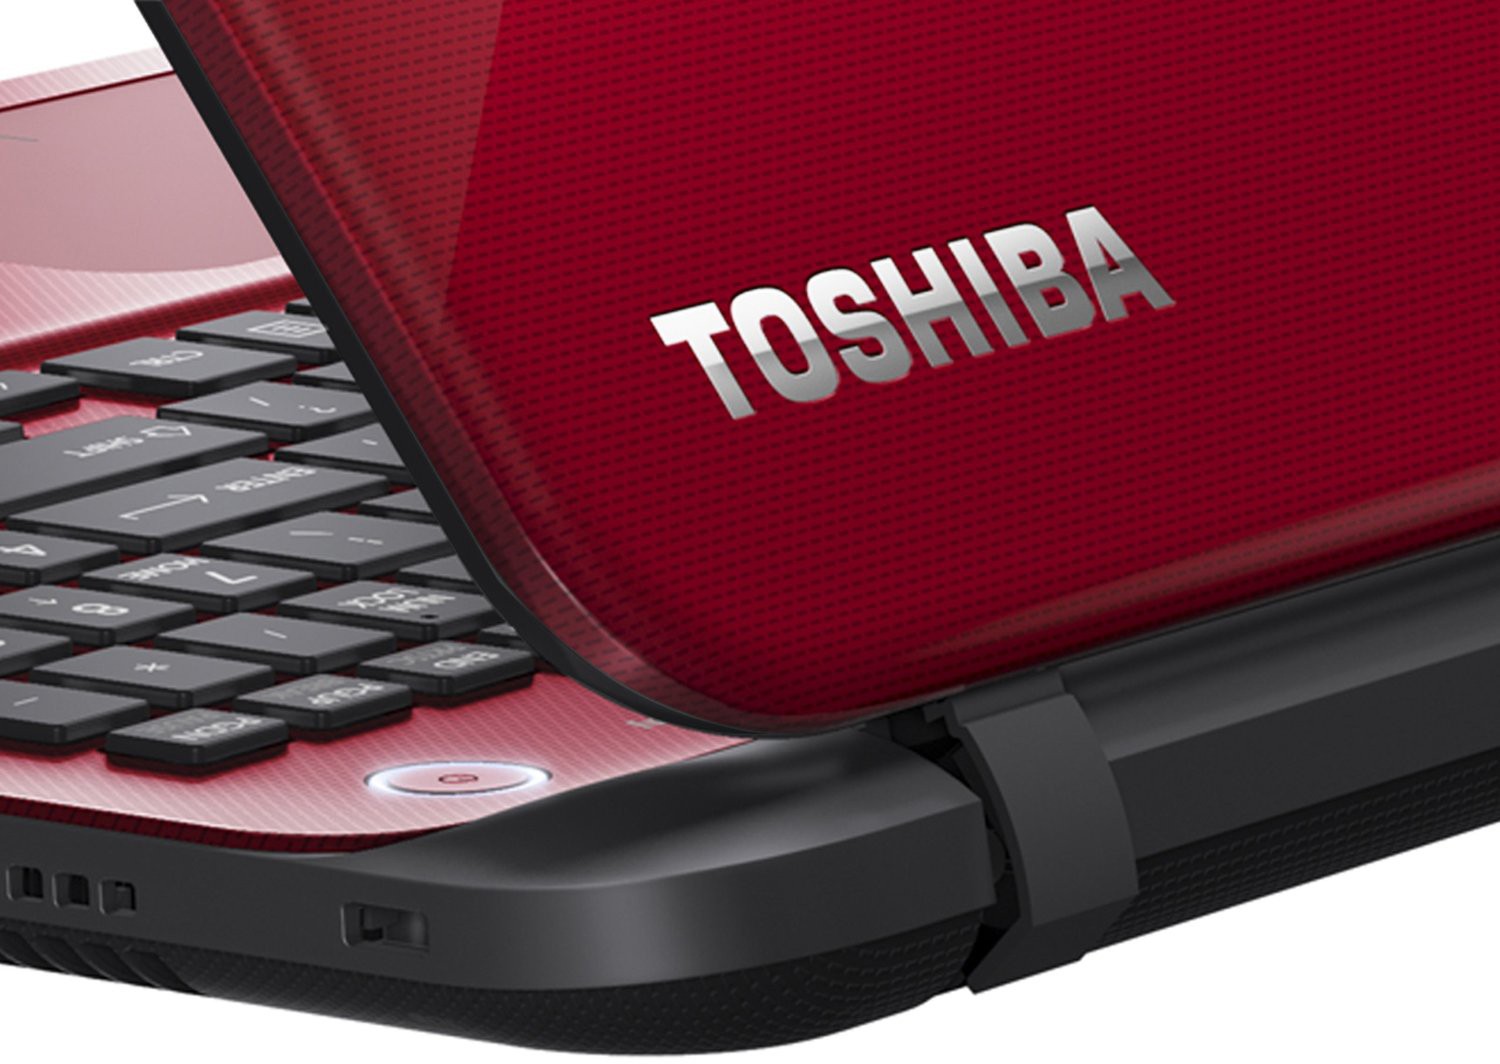 Как включить Wi-Fi на ноутбуке Toshiba: наше руководство